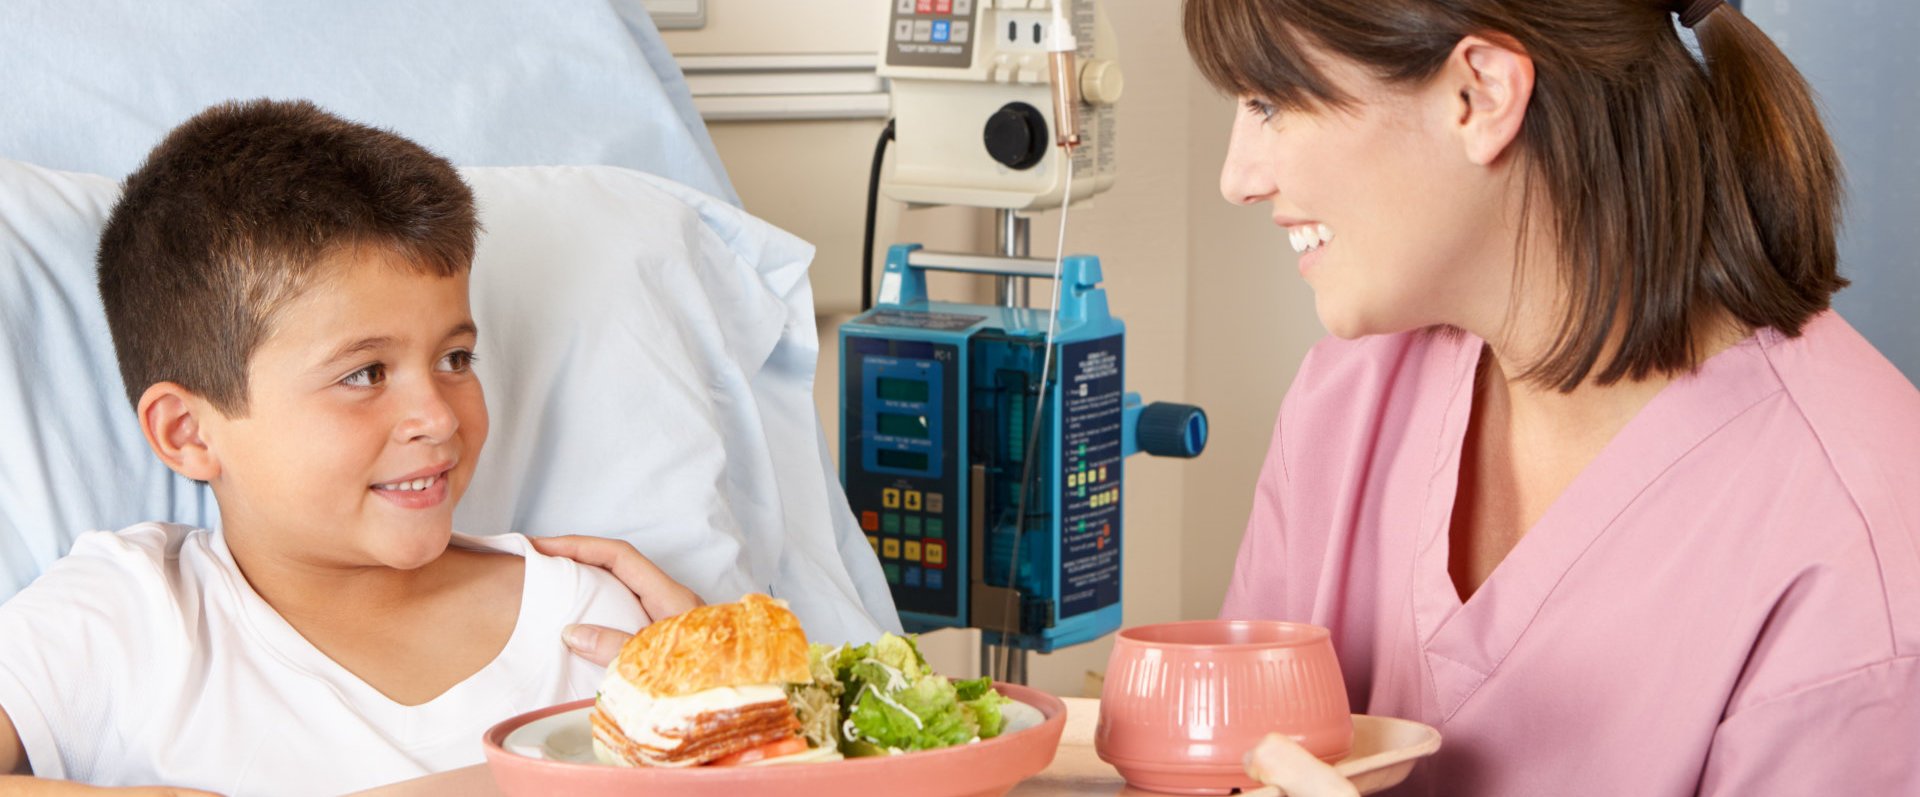 nurse serving food to patient